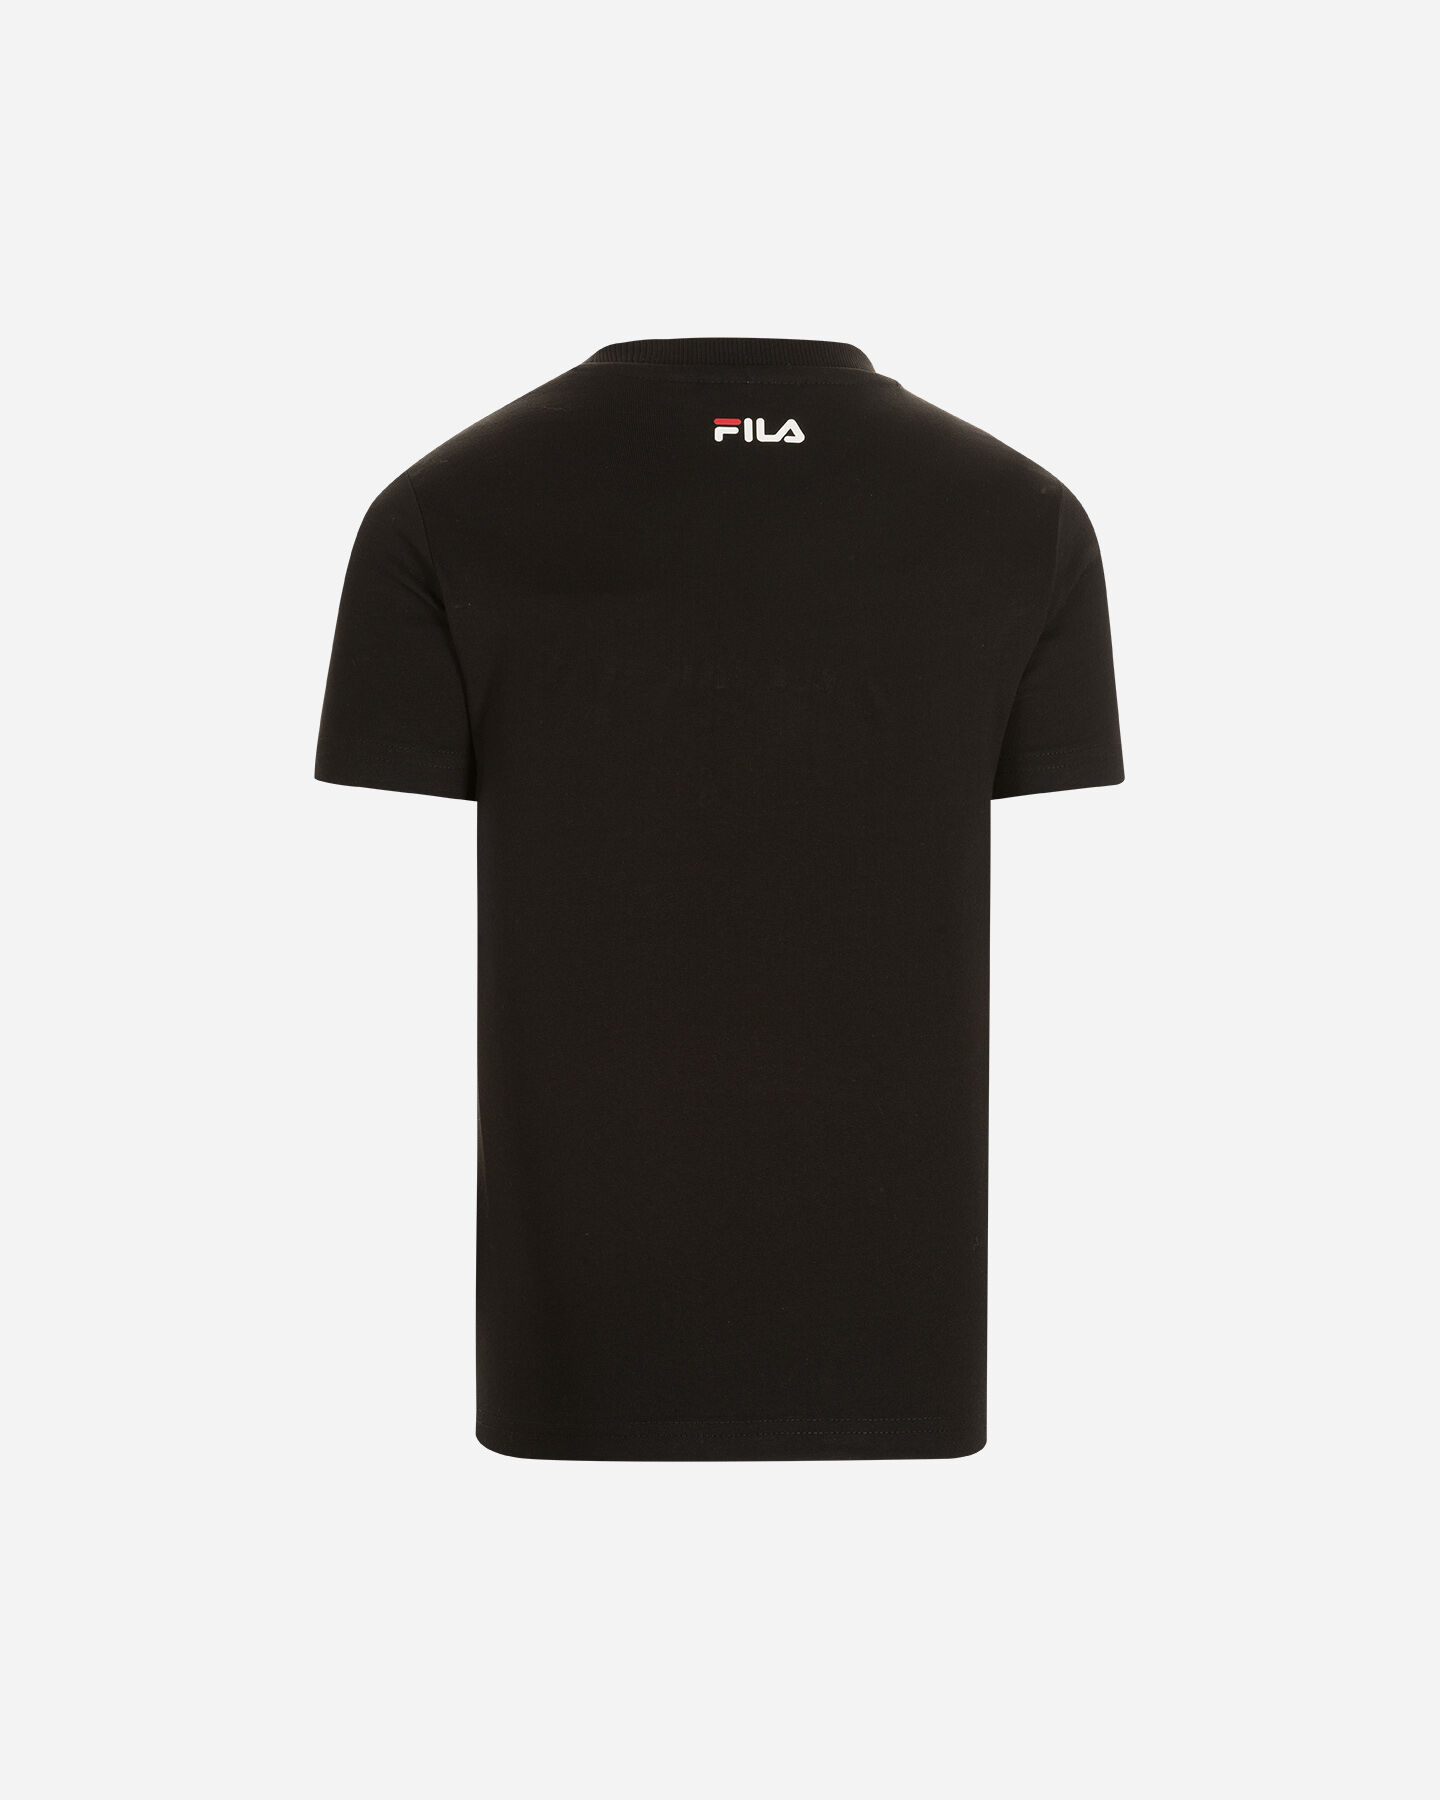  T-Shirt FILA GRAPHICS LOGO F-BOX JR S4100605|050|6A scatto 1